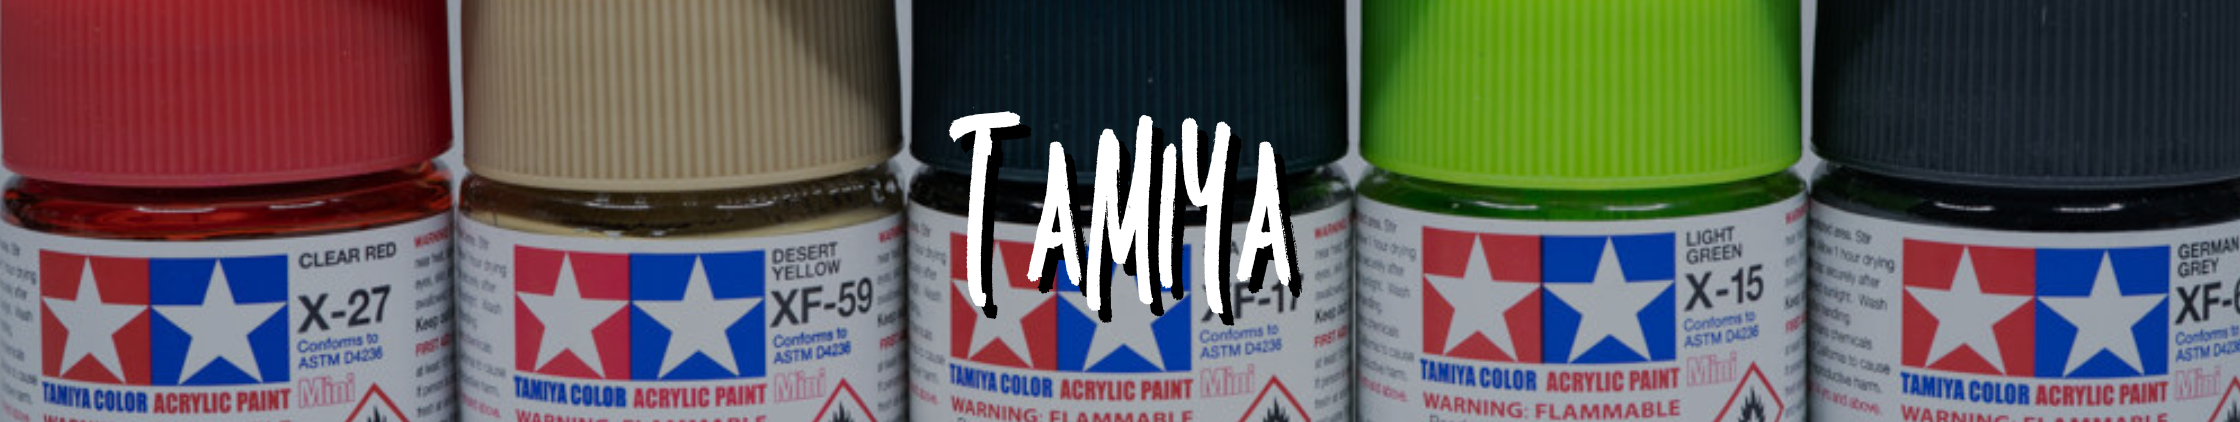 Tamiya Bottles